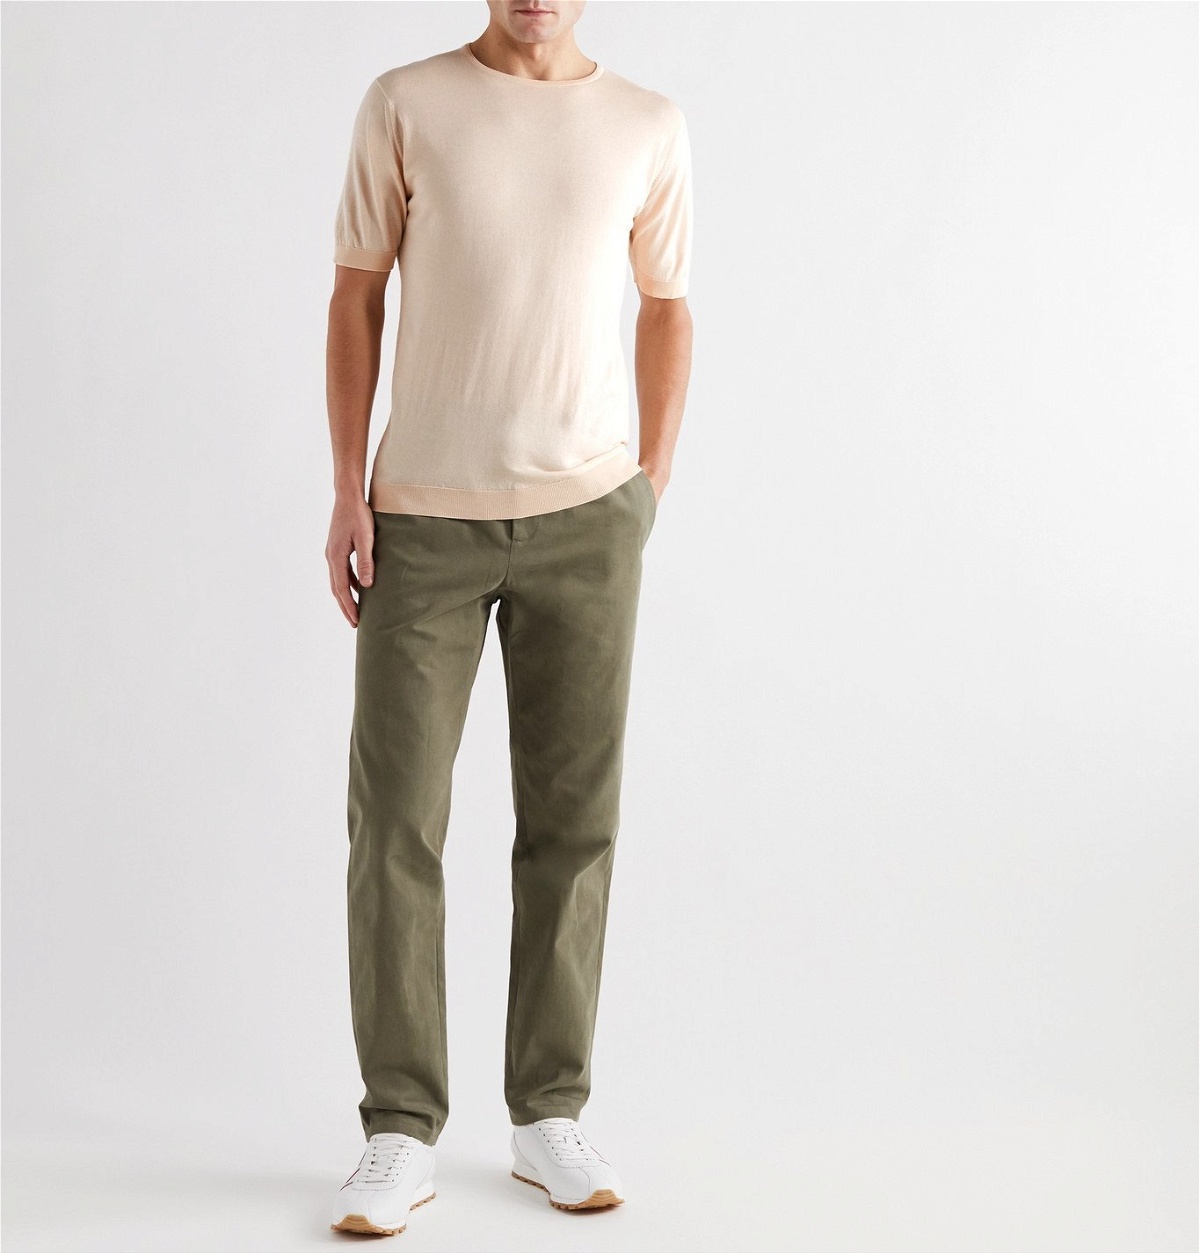 John Smedley - Belden Slim-Fit Knitted Sea Island Cotton T-Shirt ...